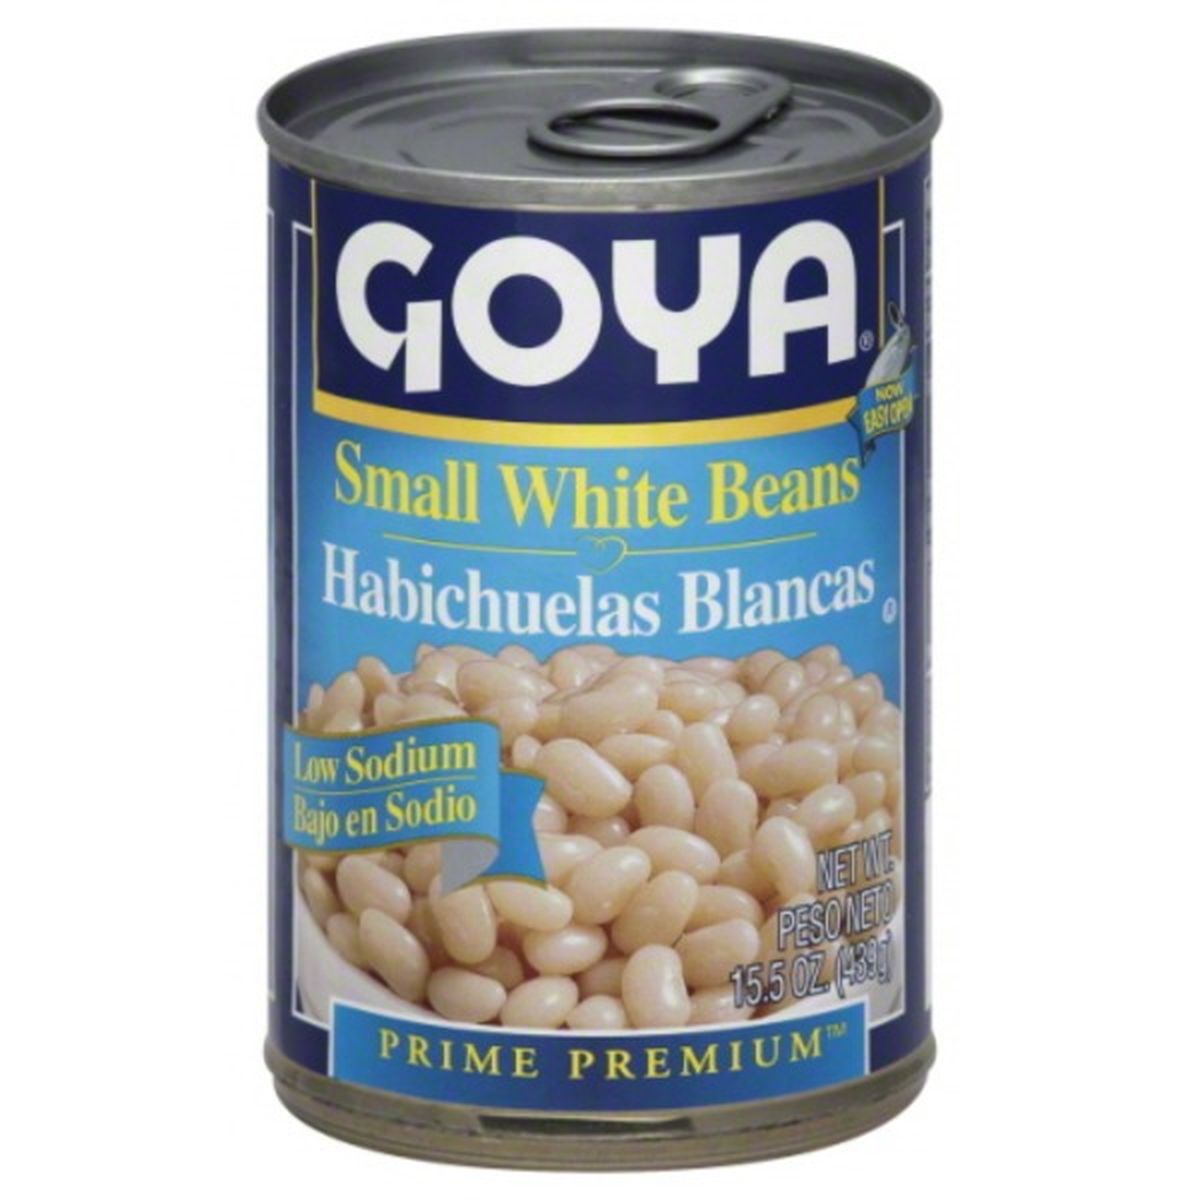 Calories in Goya Prime Premium White Beans, Small